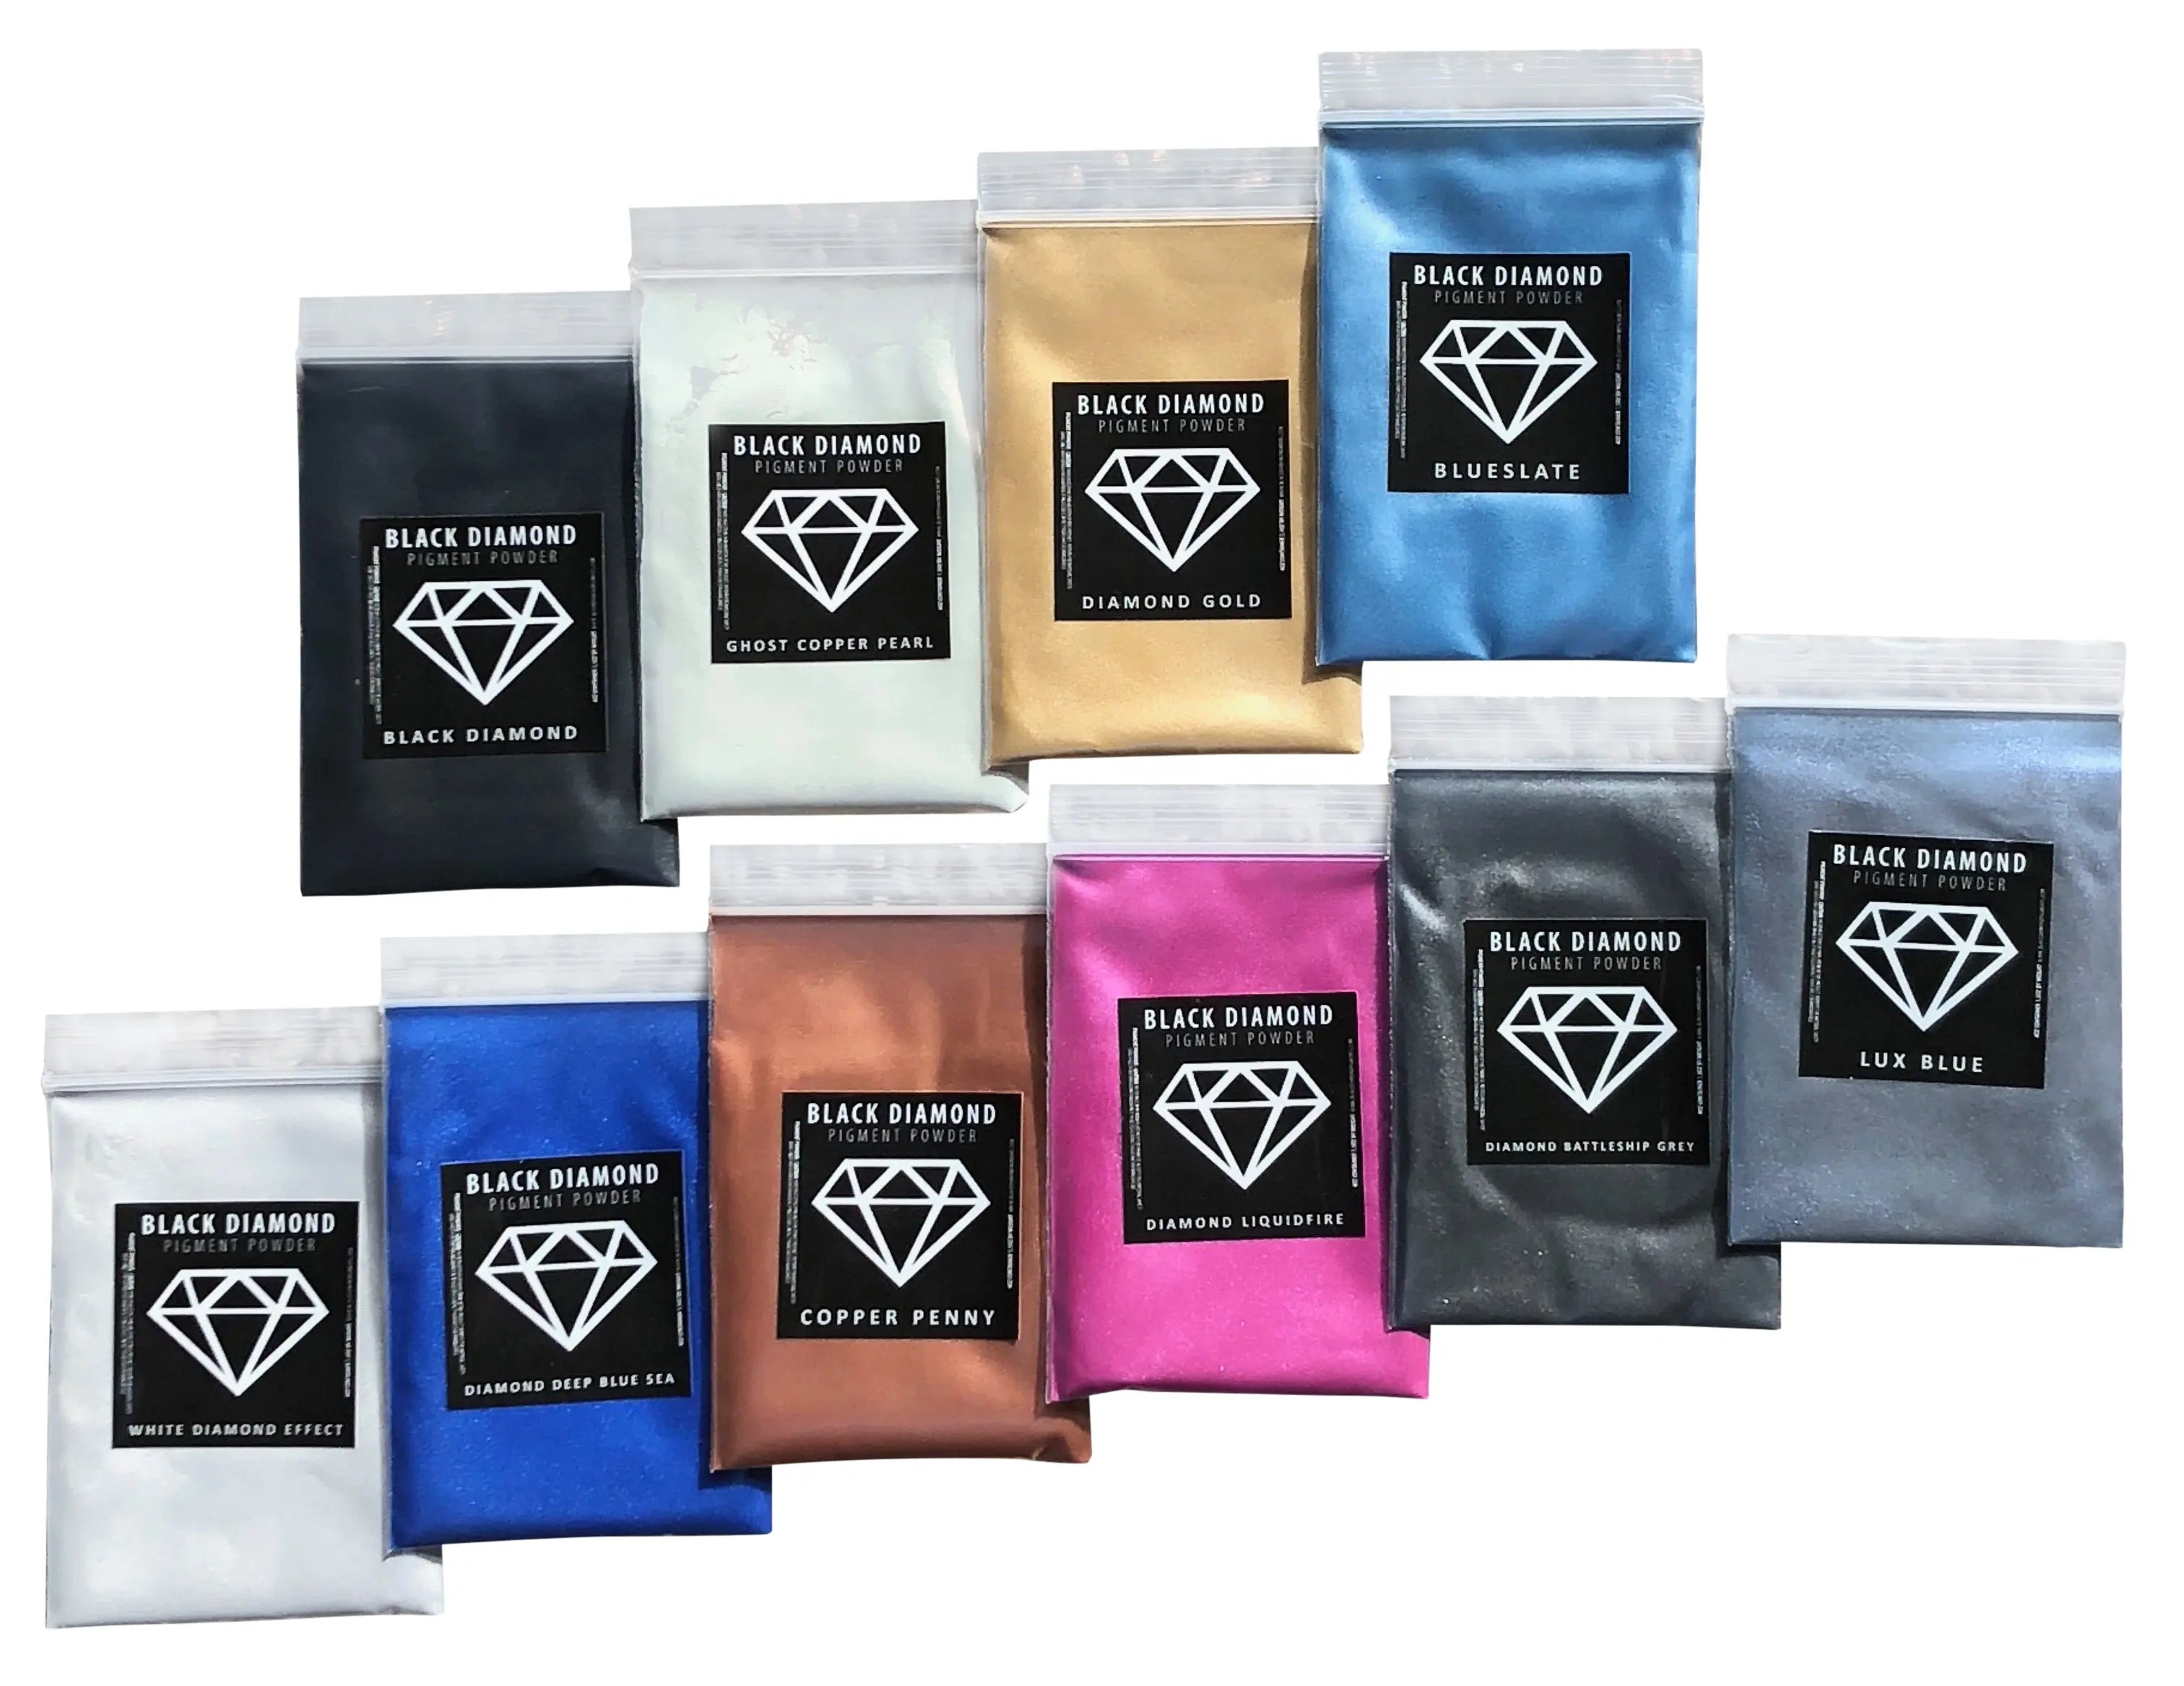 VARIETY PACK 6 (10 COLORS) powder pigment variety packs Black Diamond